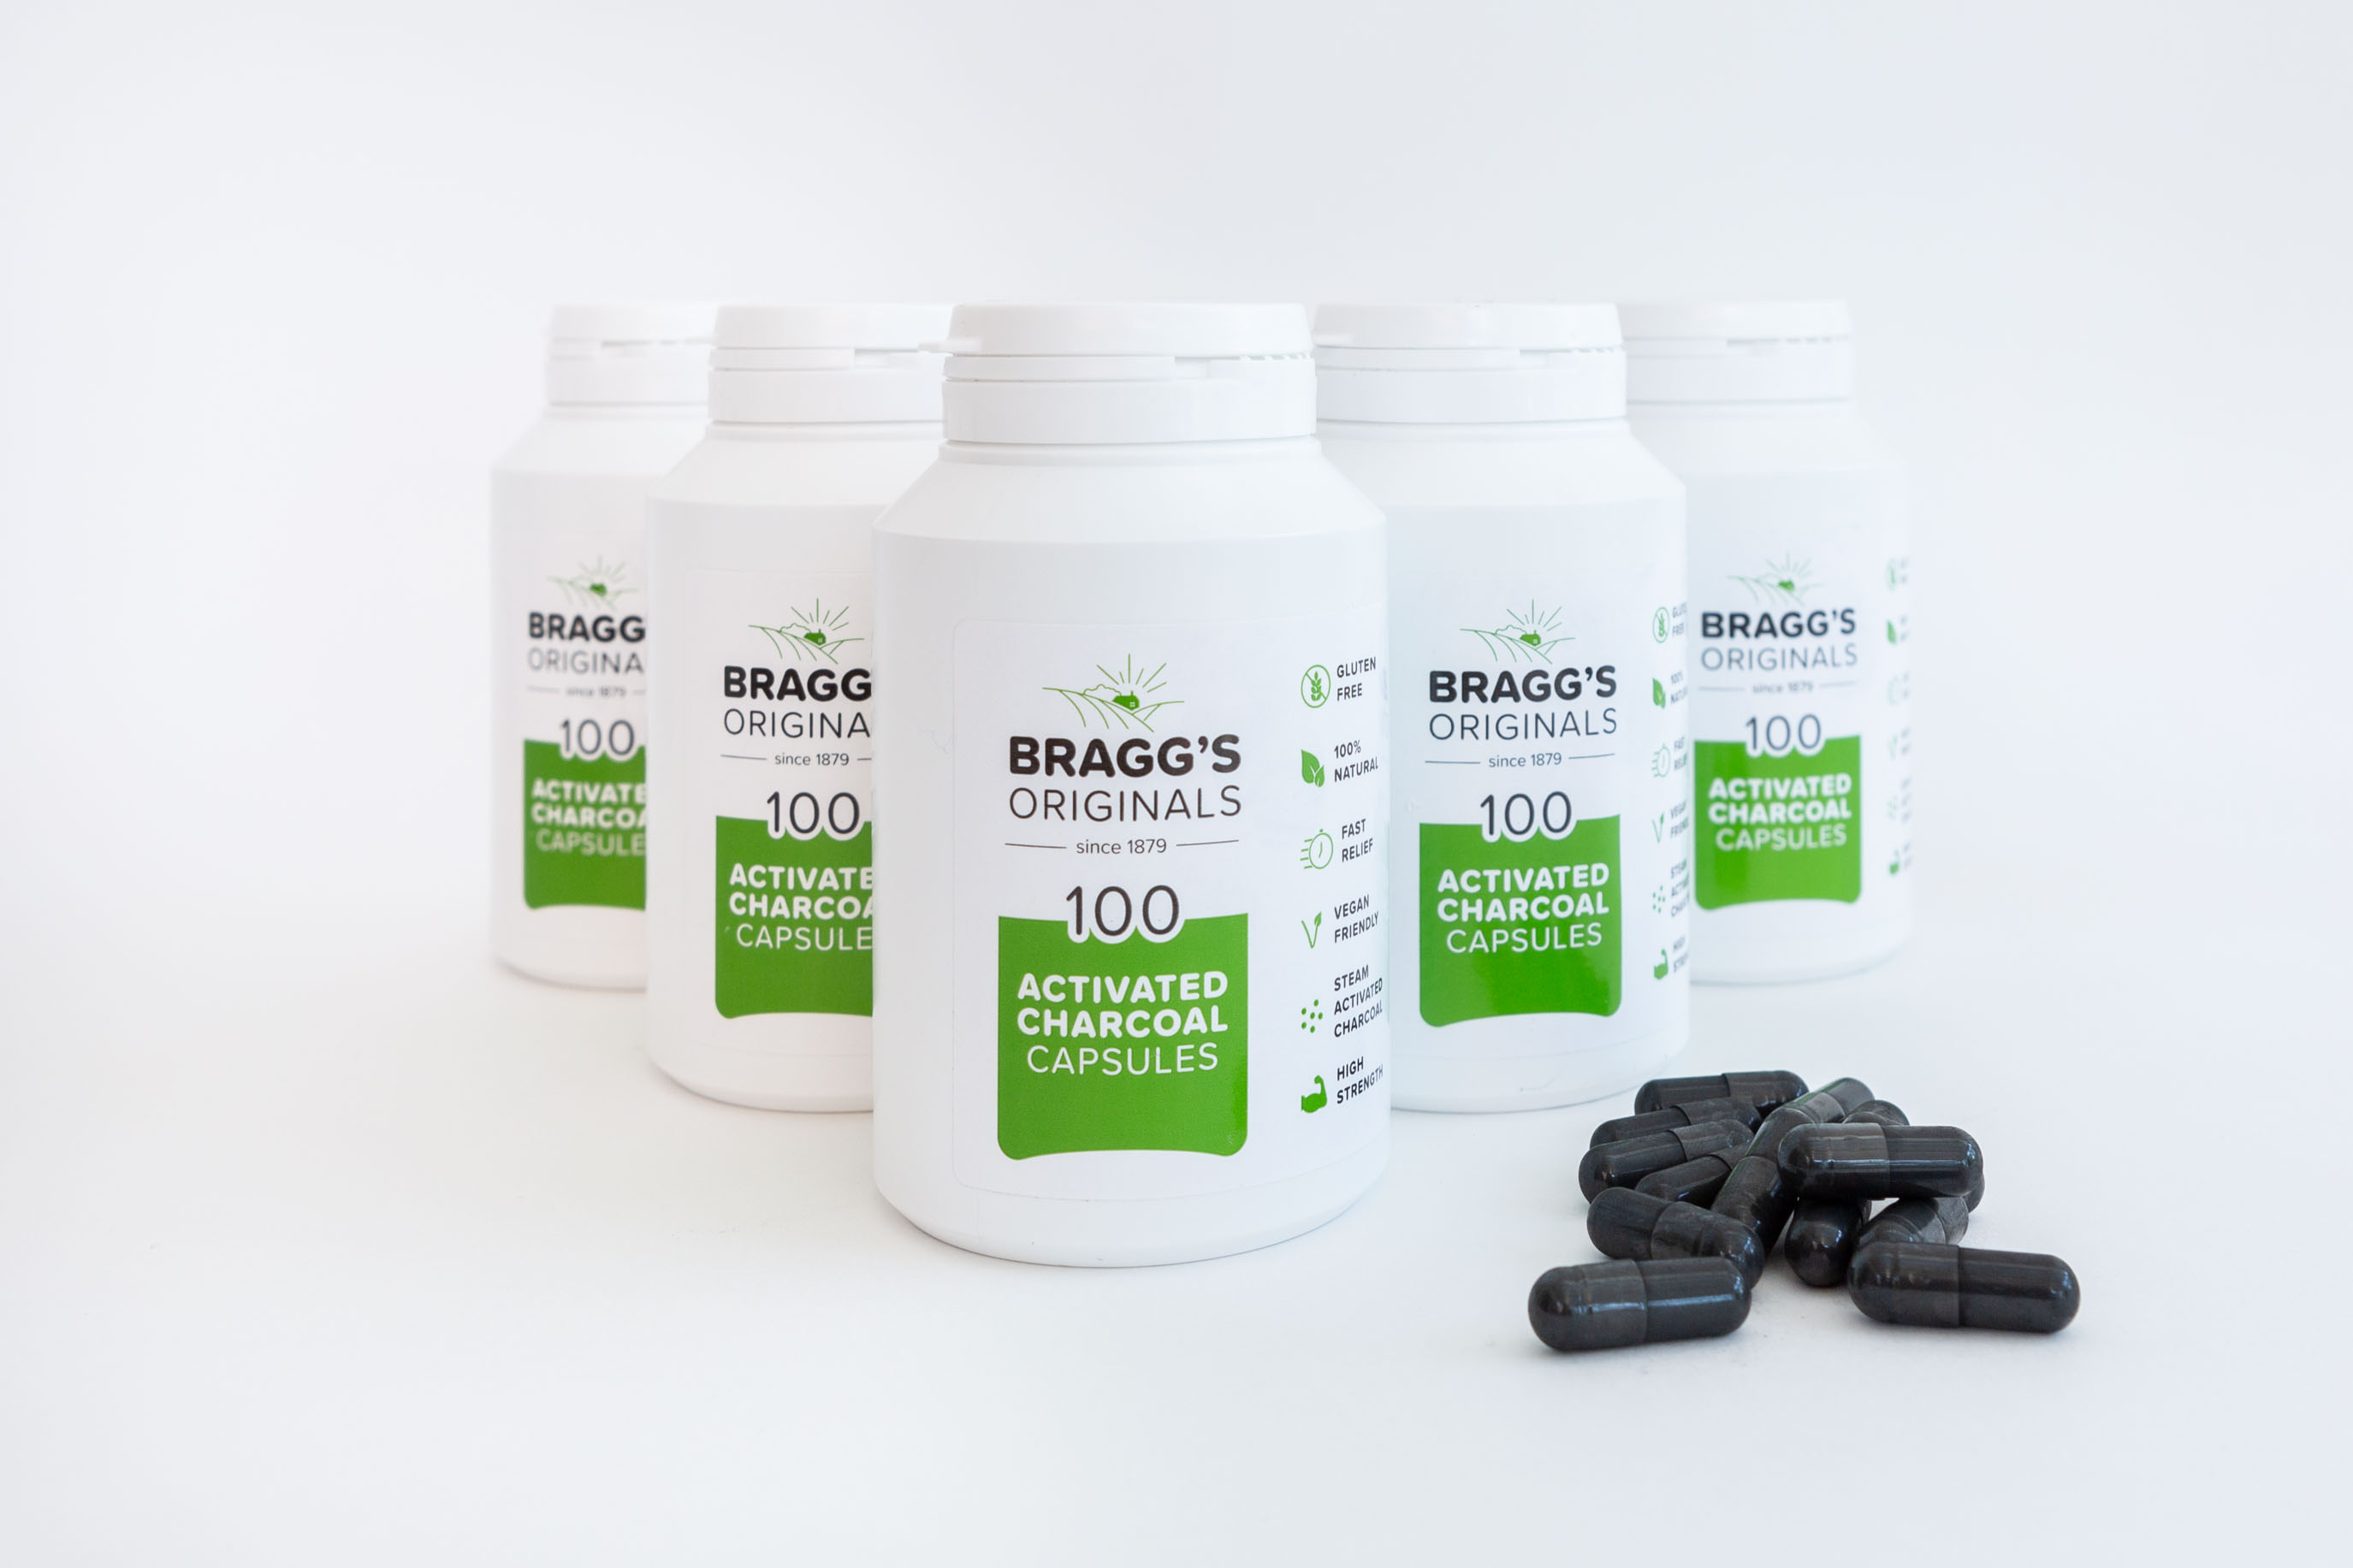 Braggs launches Vegetarian and Vegan Charcoal Capsules 